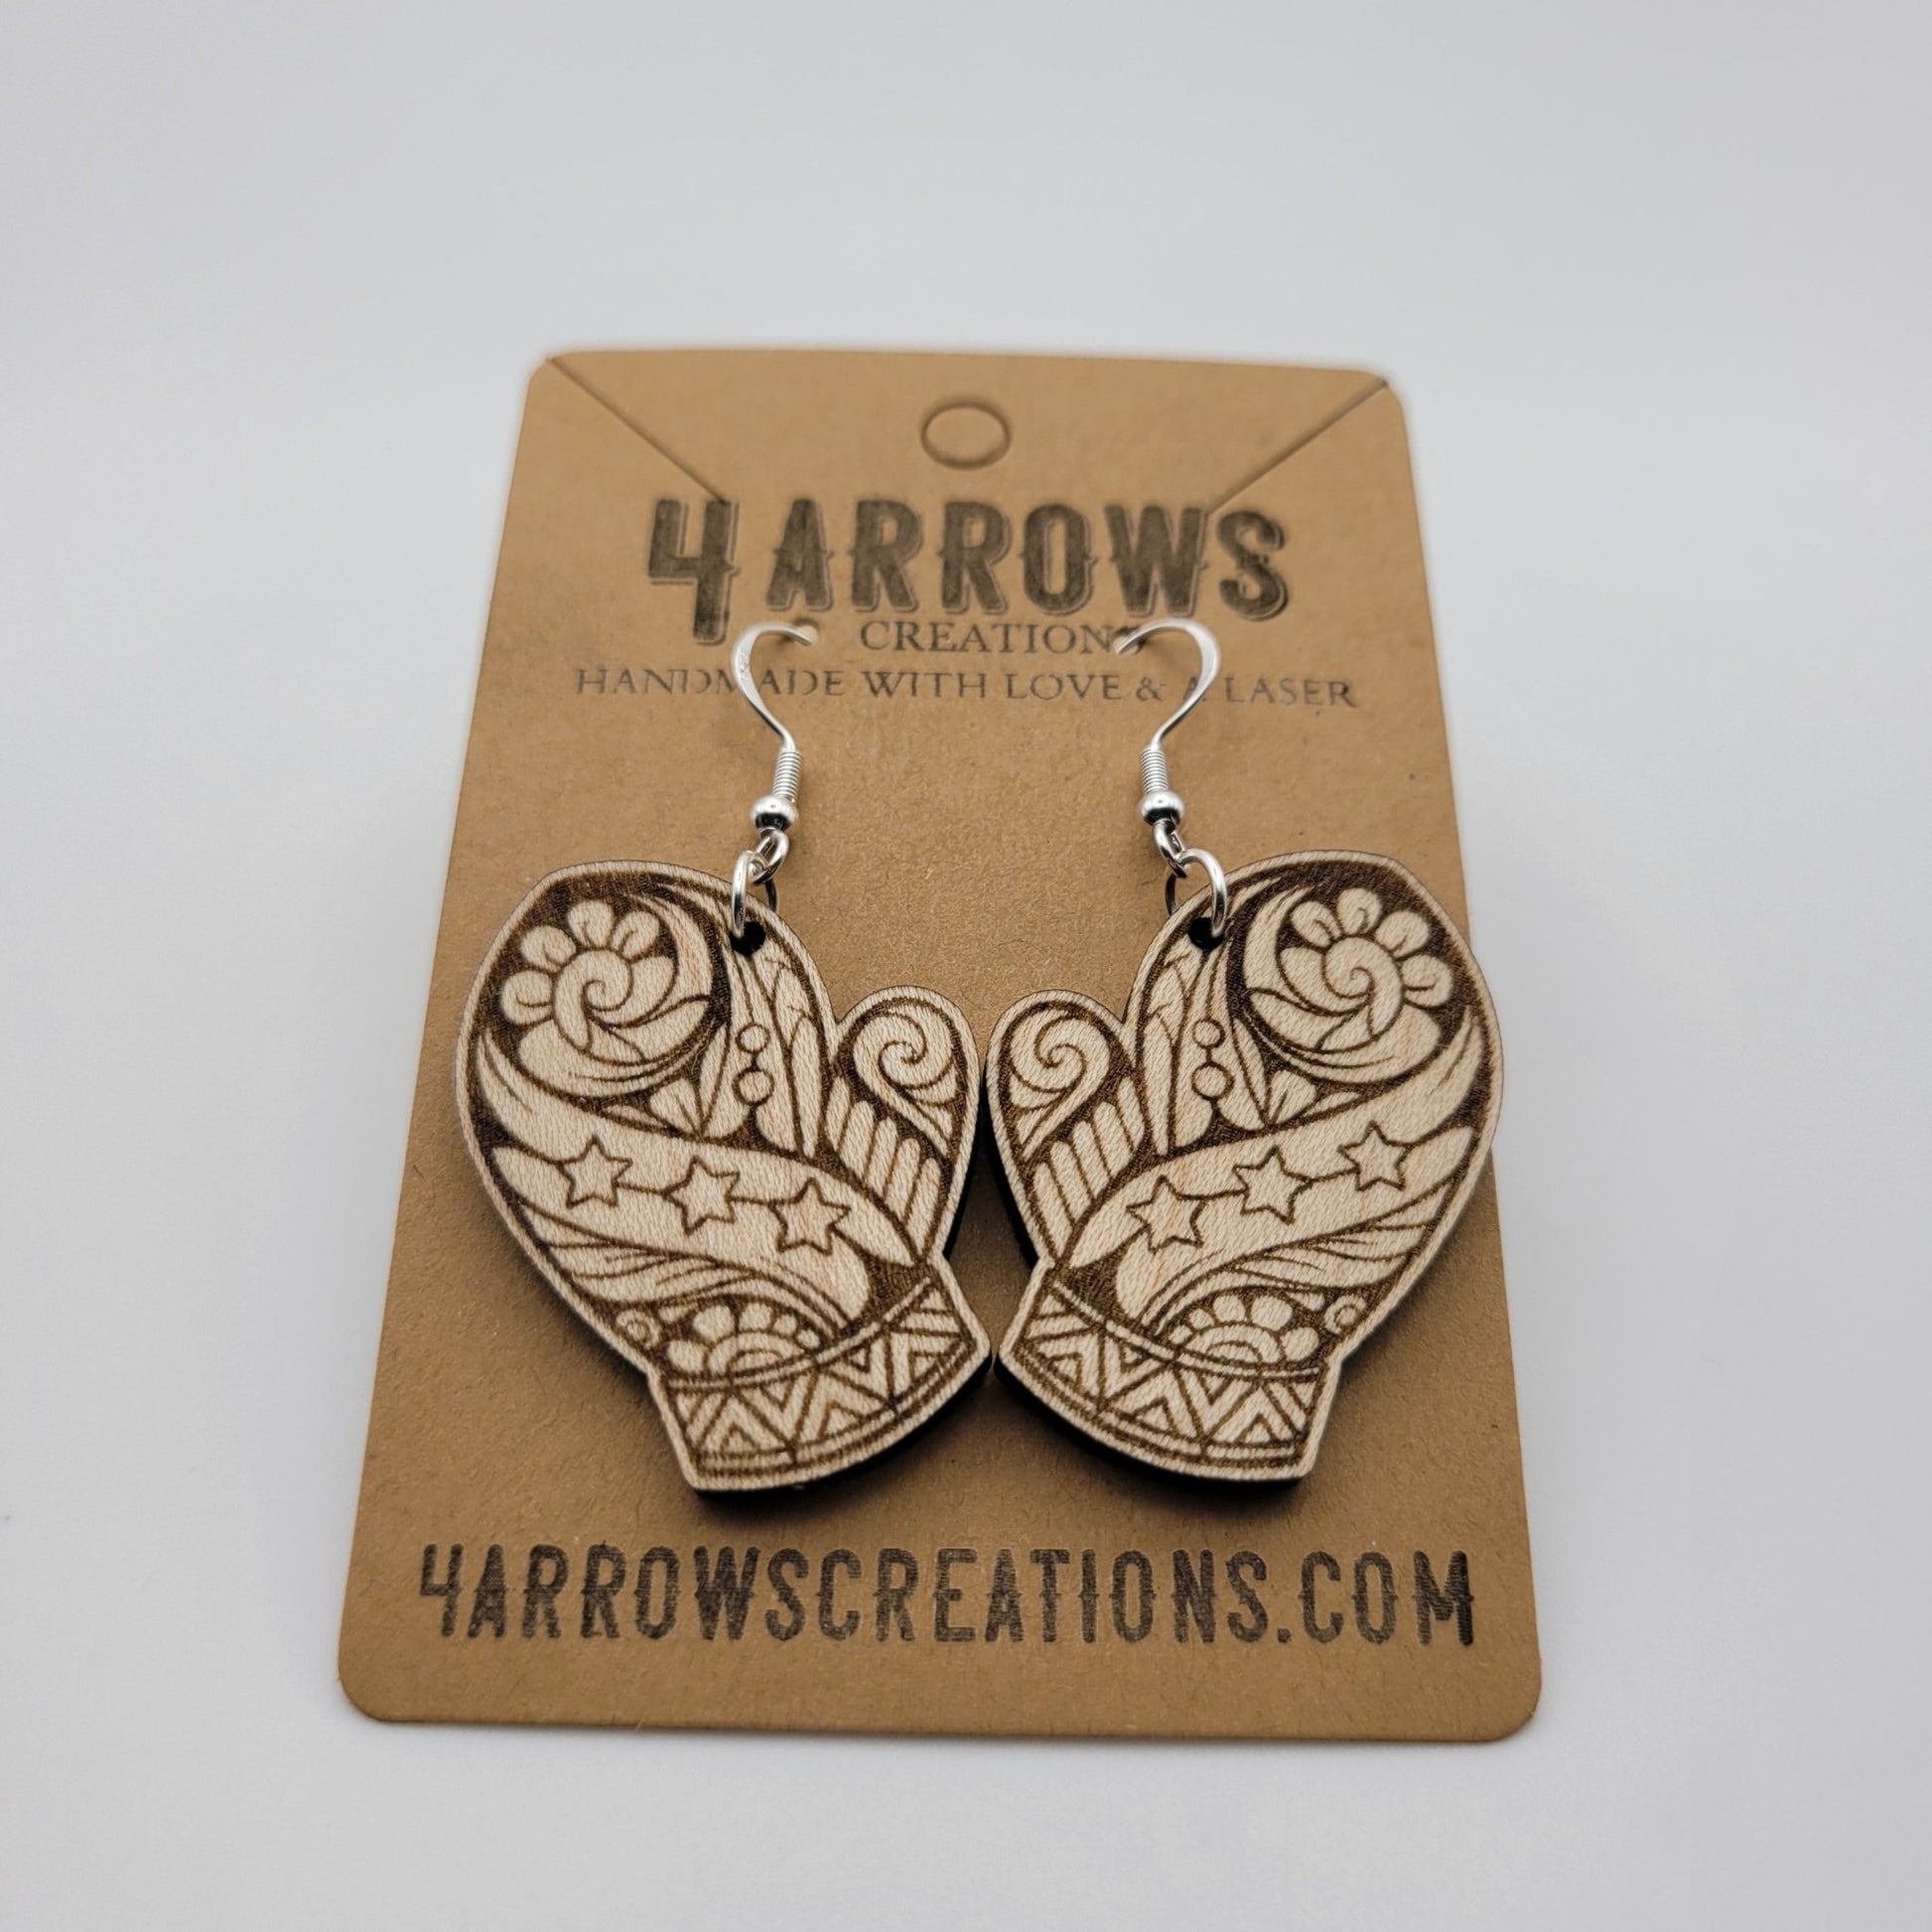 Mittens Wood Dangle Earrings - 4 Arrows Creations